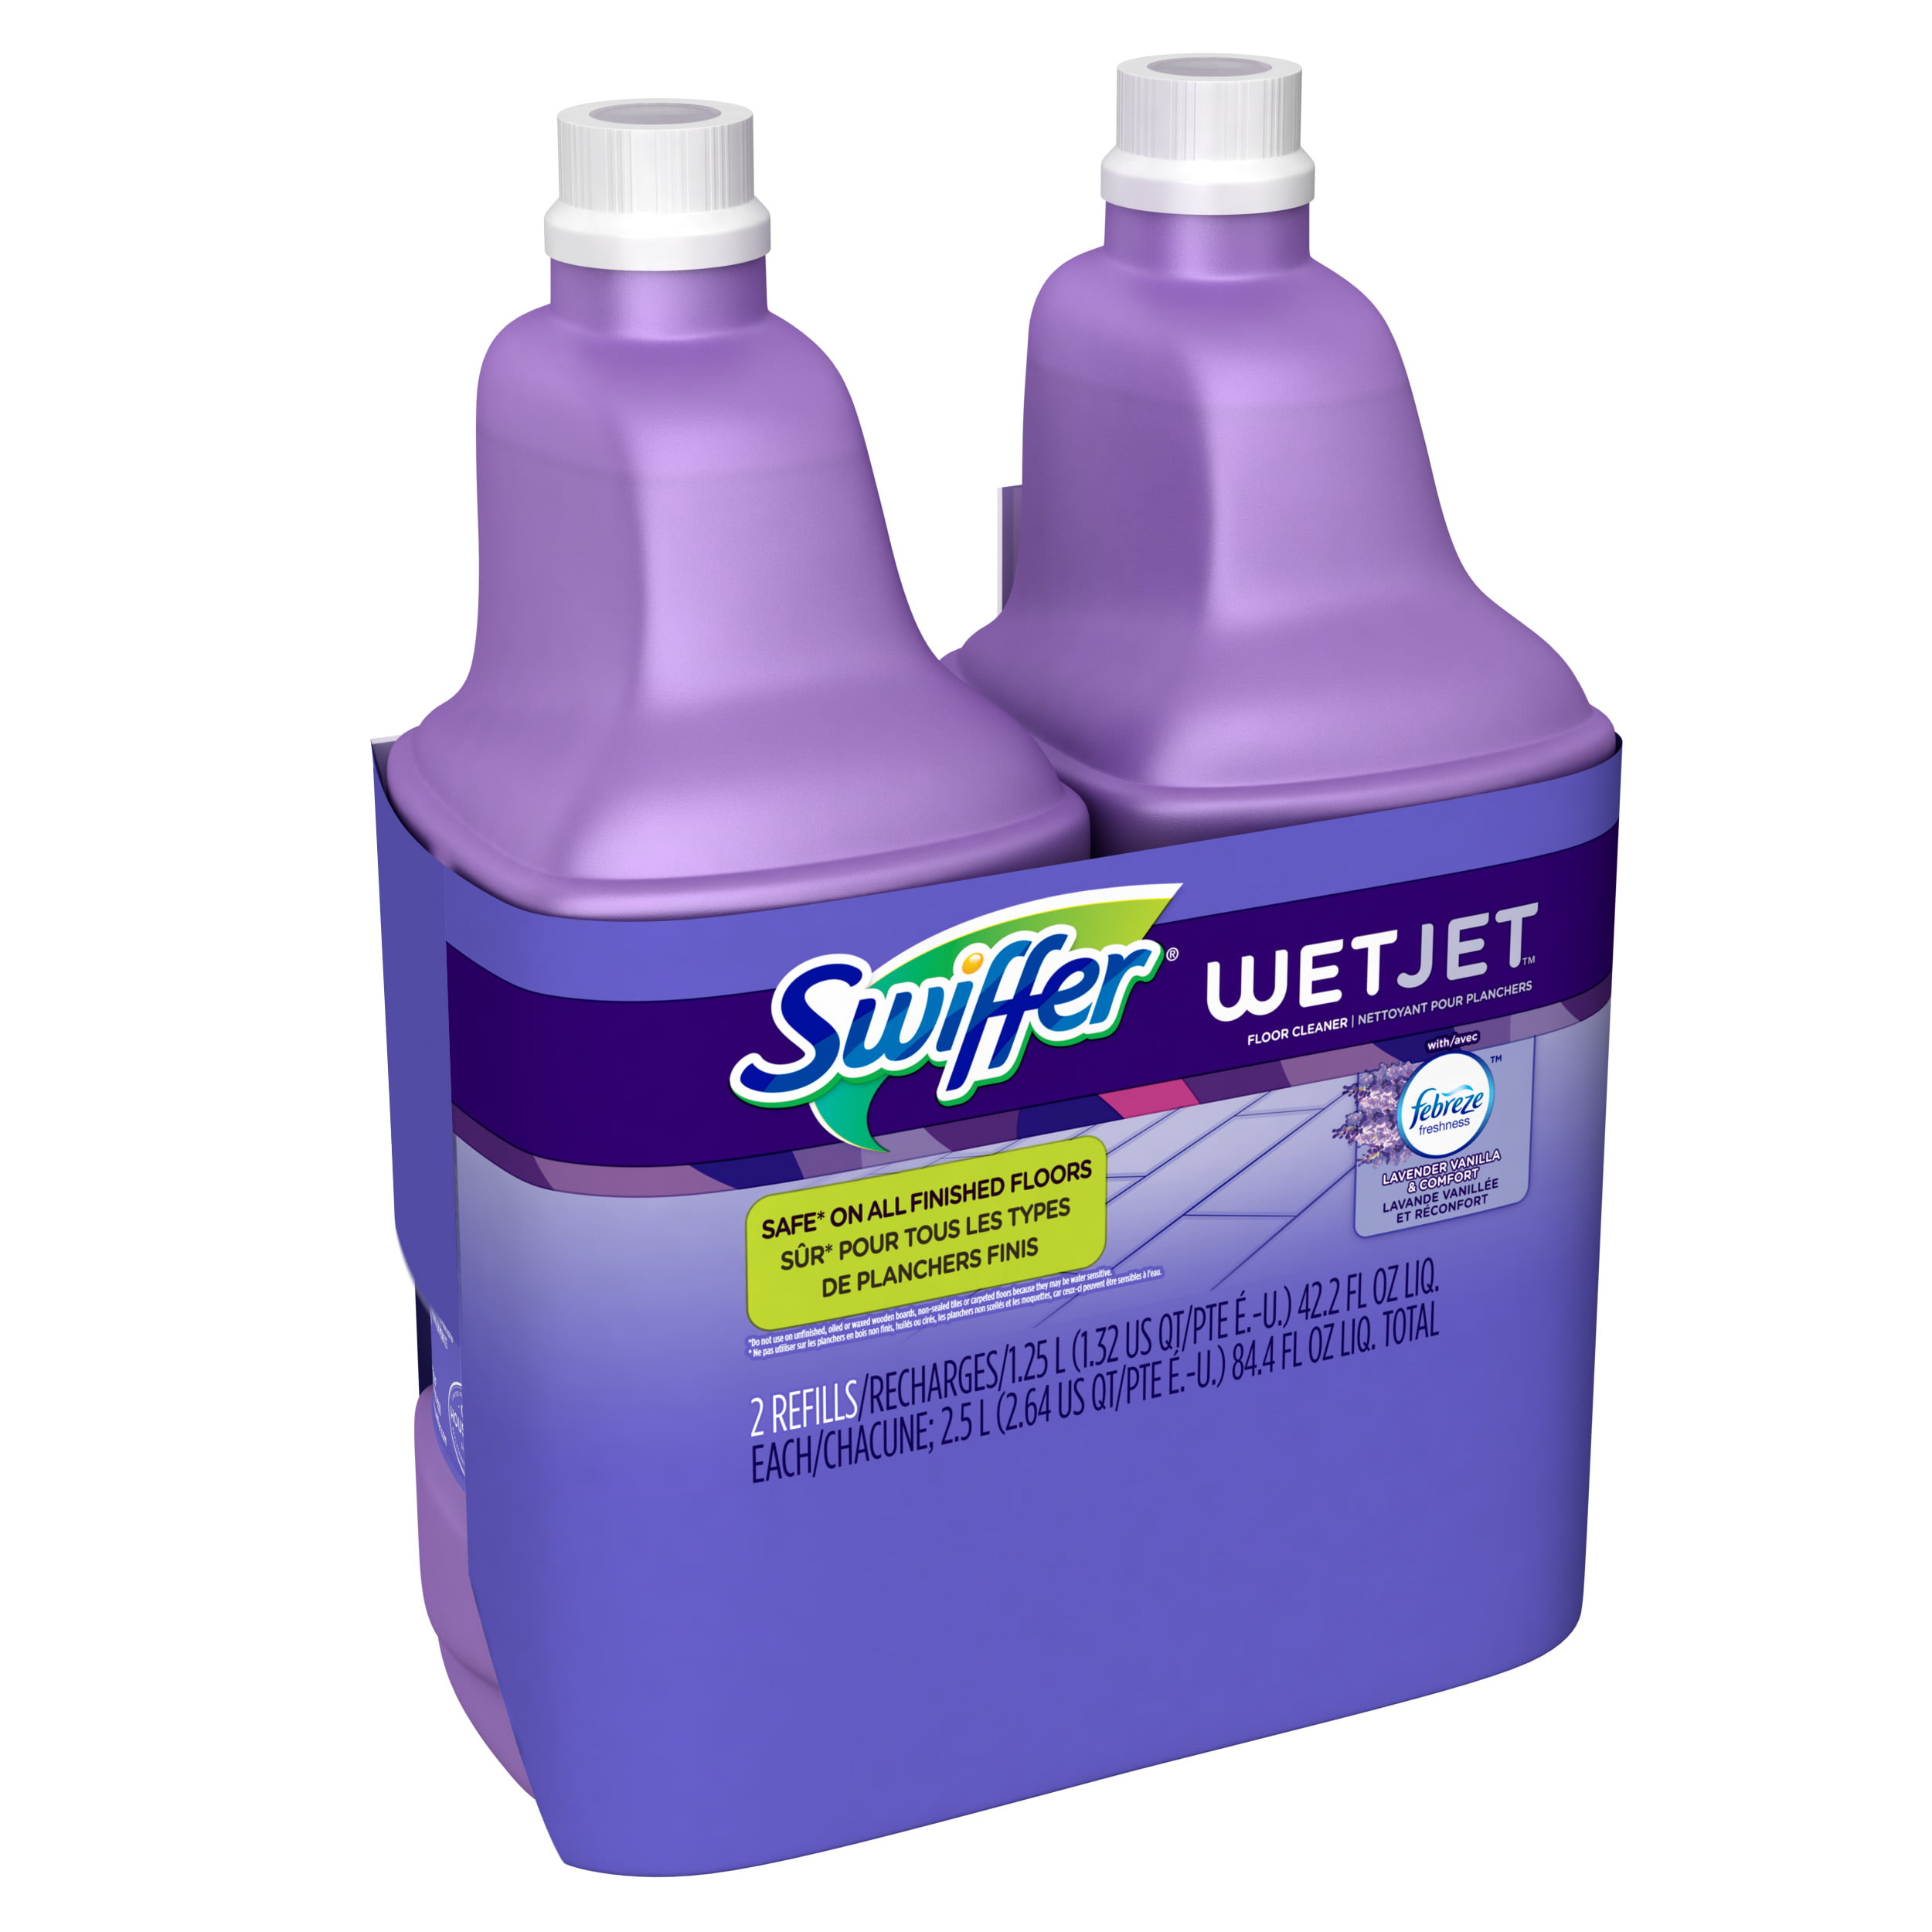 Swiffer Wetjet Multi Purpose Floor Cleaner Solution With Febreze Refill Lavendar Vanilla And Comfort Scent 125 Liter Pack Of 2